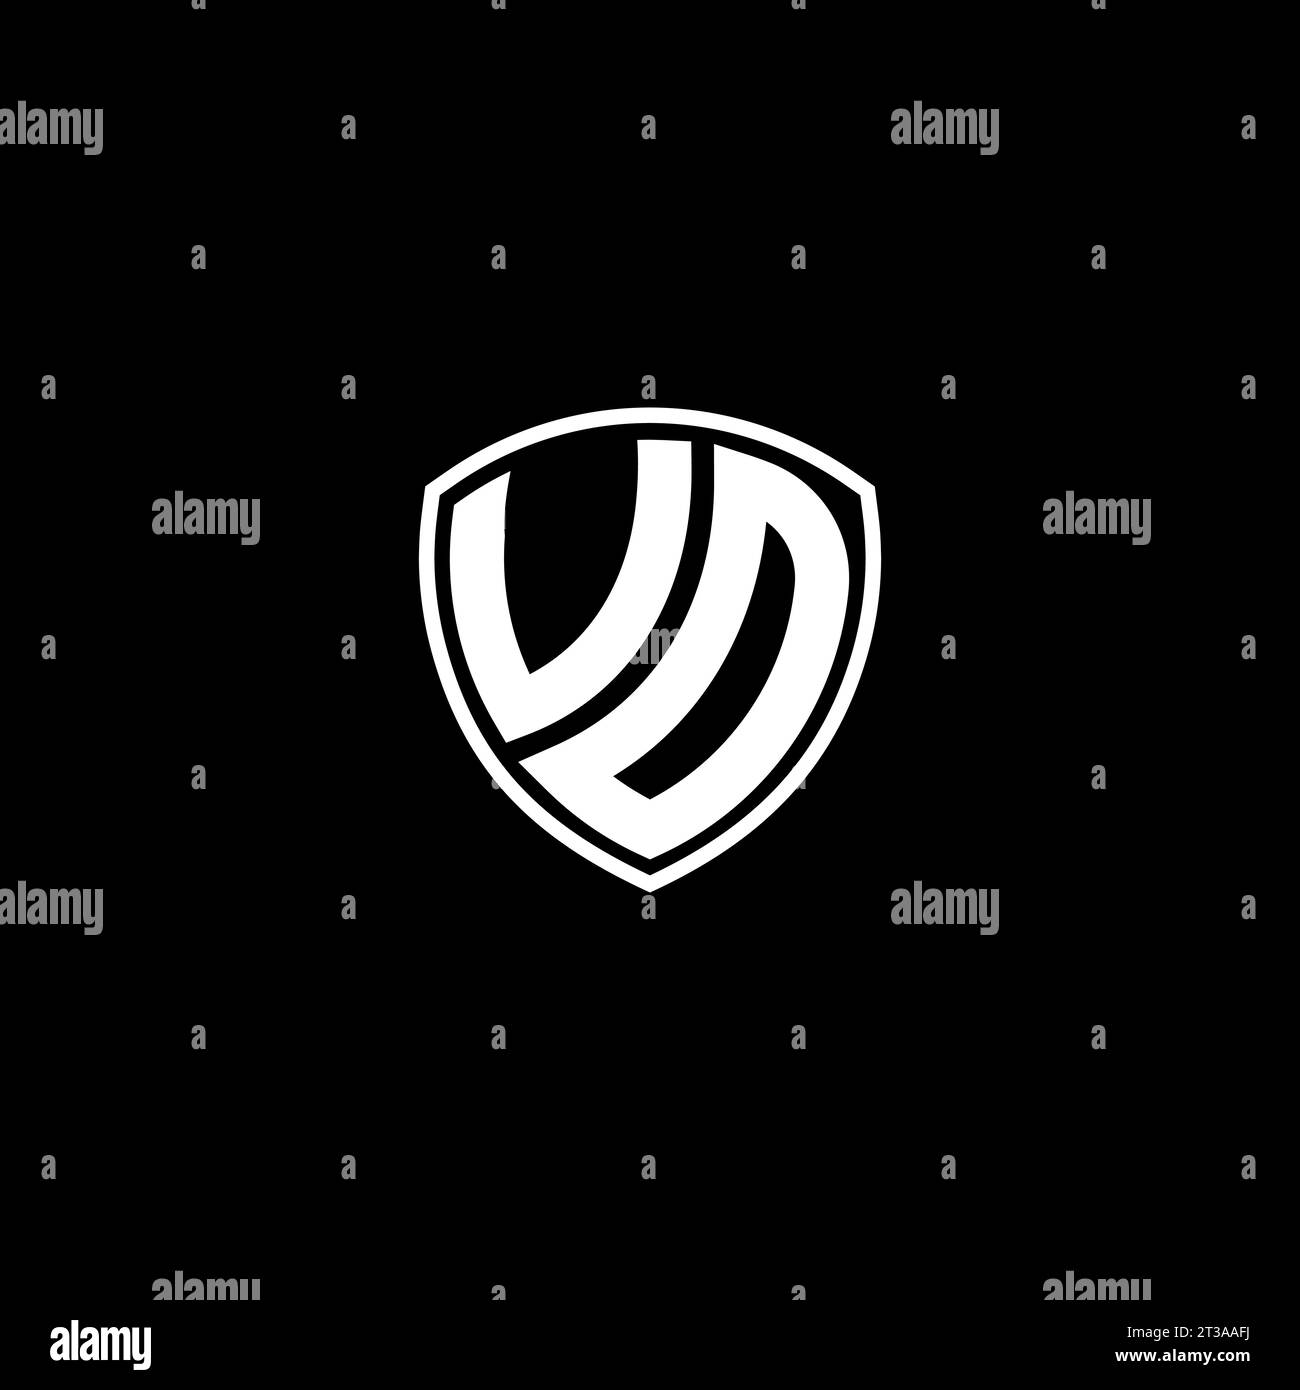 VD logo monogram emblem style with shield shape design template ideas Stock Vector